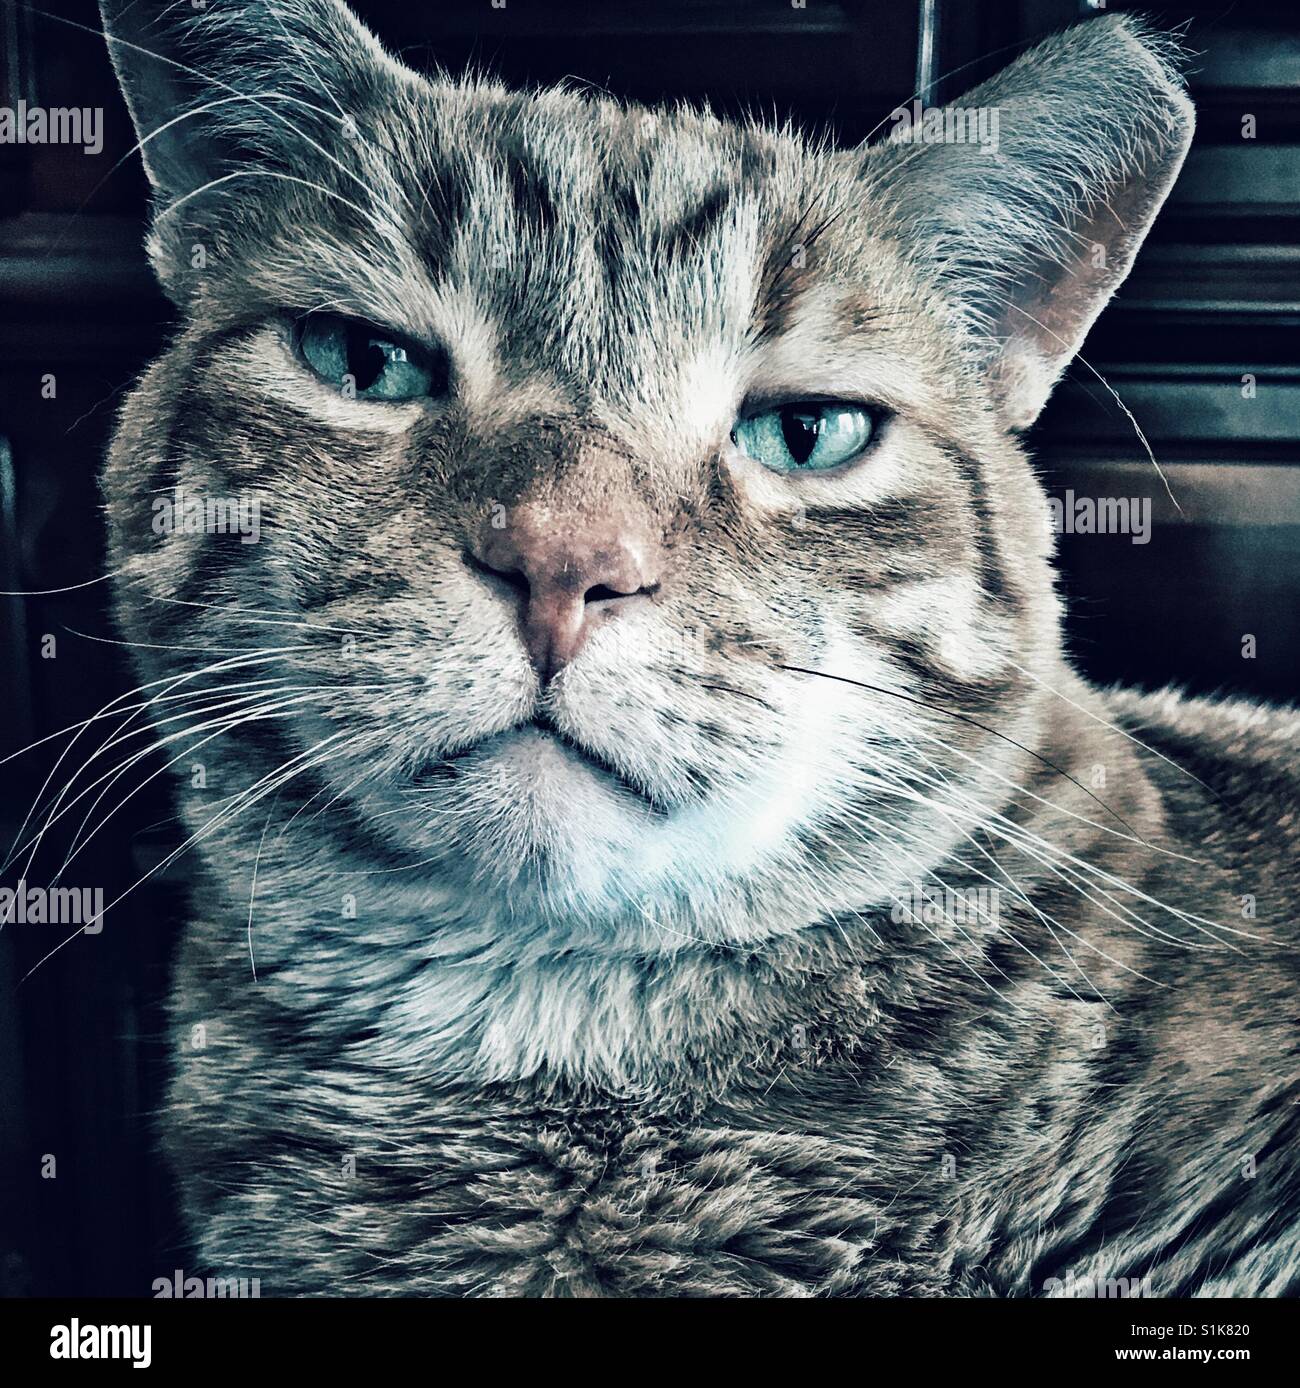 Grumpy face Scottish Fold cat! Cute photo of angry-faced kitten  La  Carmina Blog - Alternative Fashion, Goth Travel, Subcultures